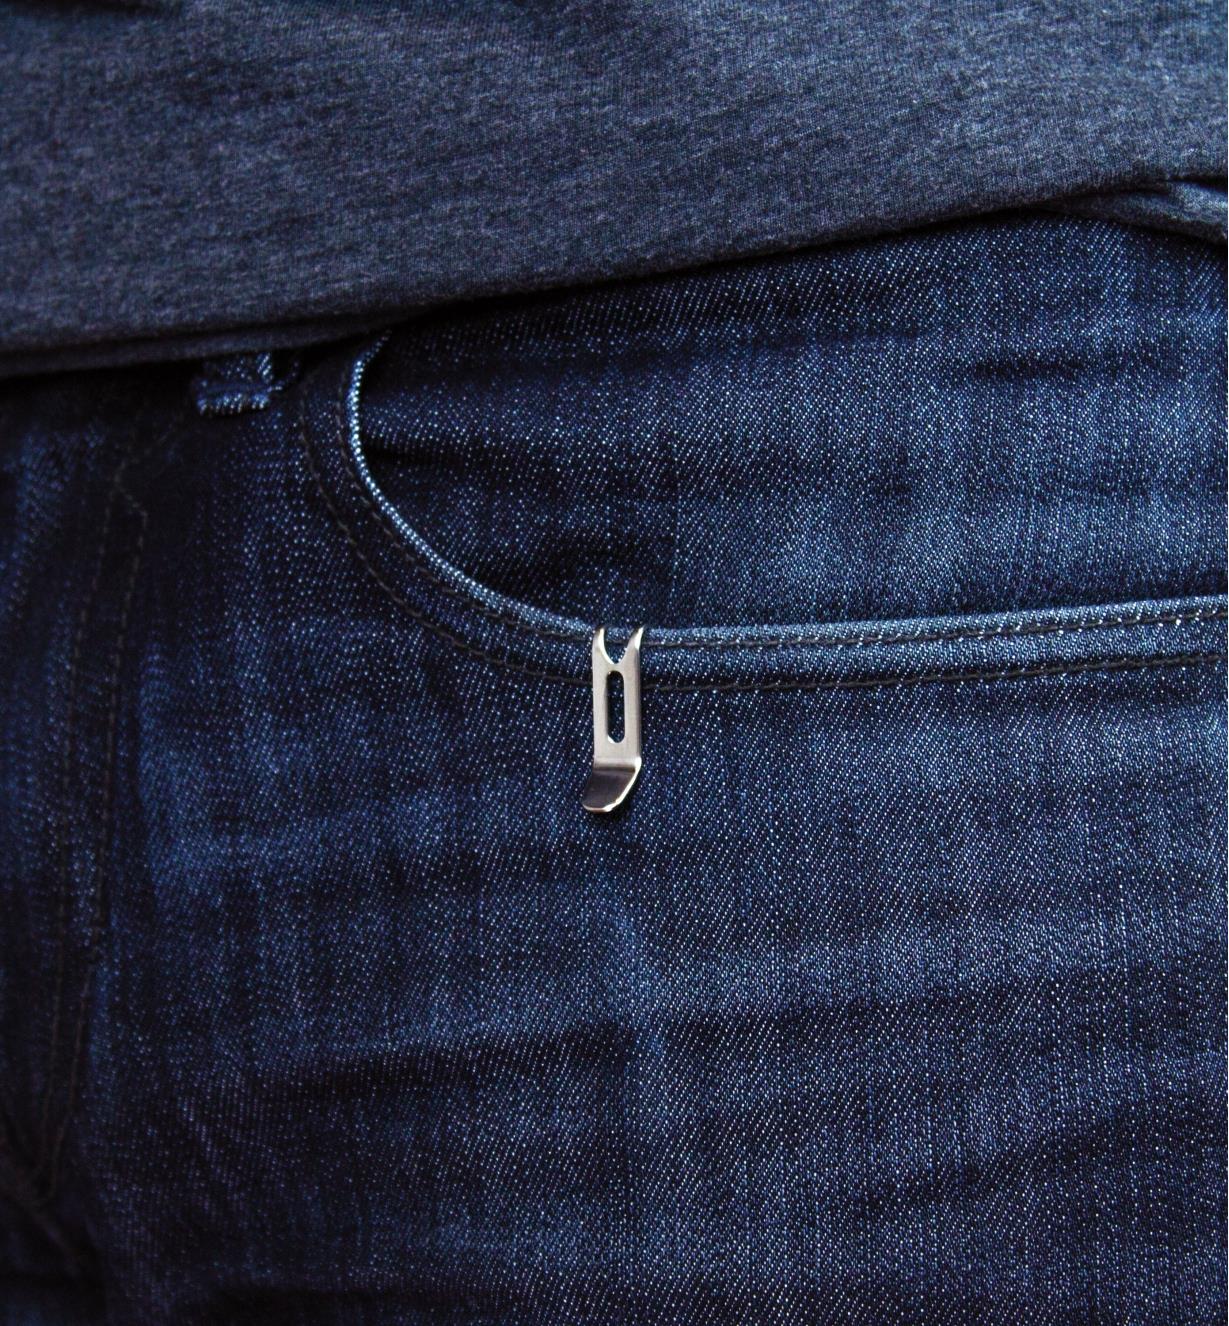 KeySmart Nano attached to a jeans pocket